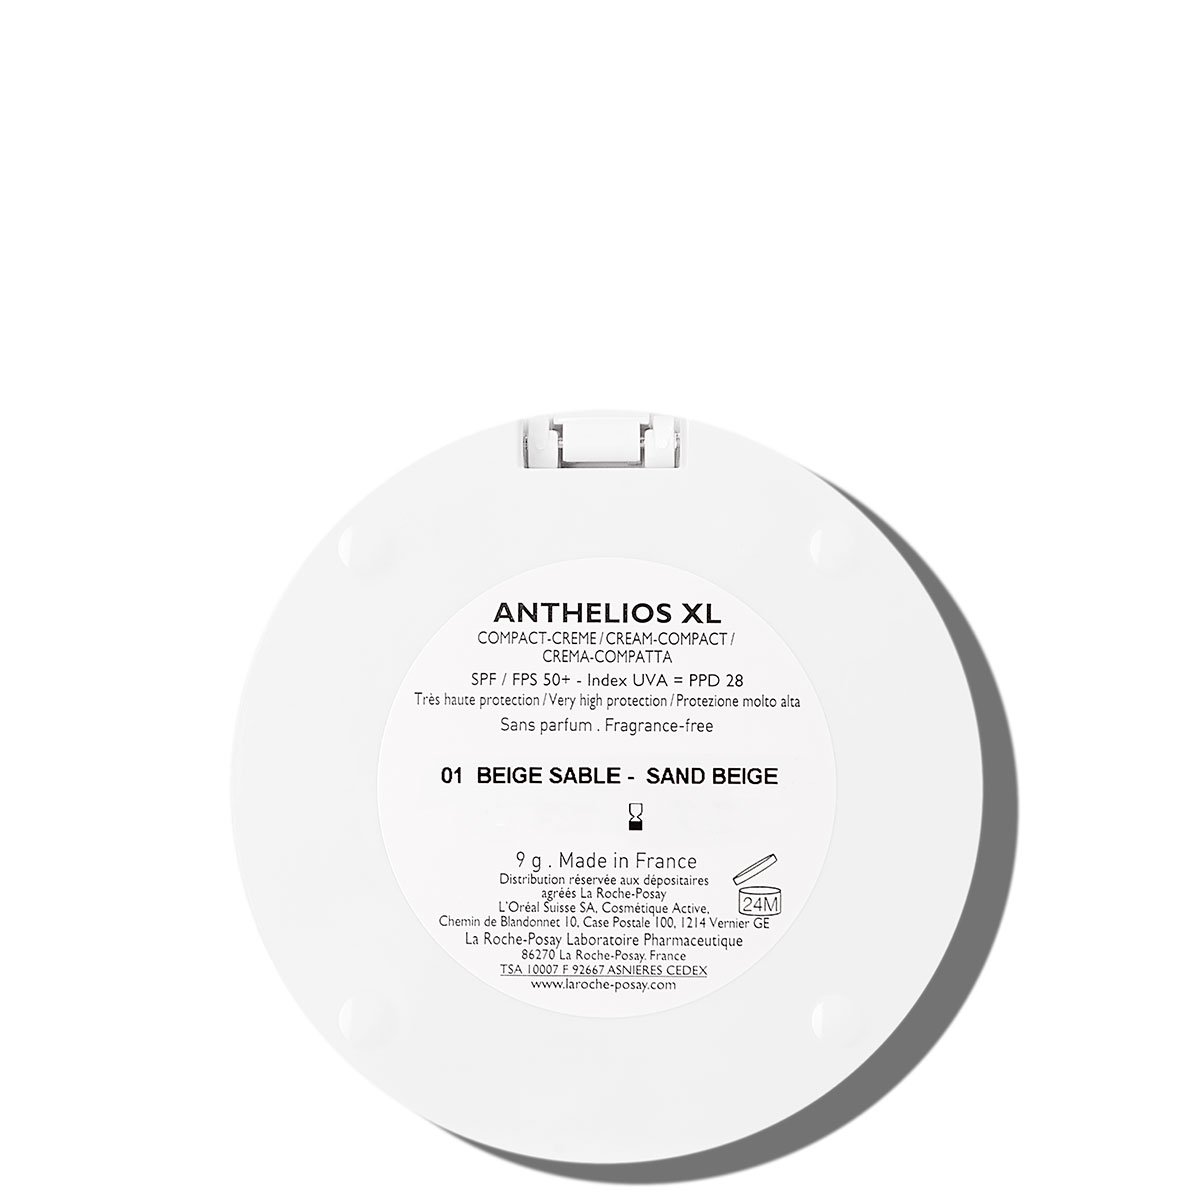 La Roche Posay ProductPage Sun Anthelios XL Compact Cream Spf50 Shade 